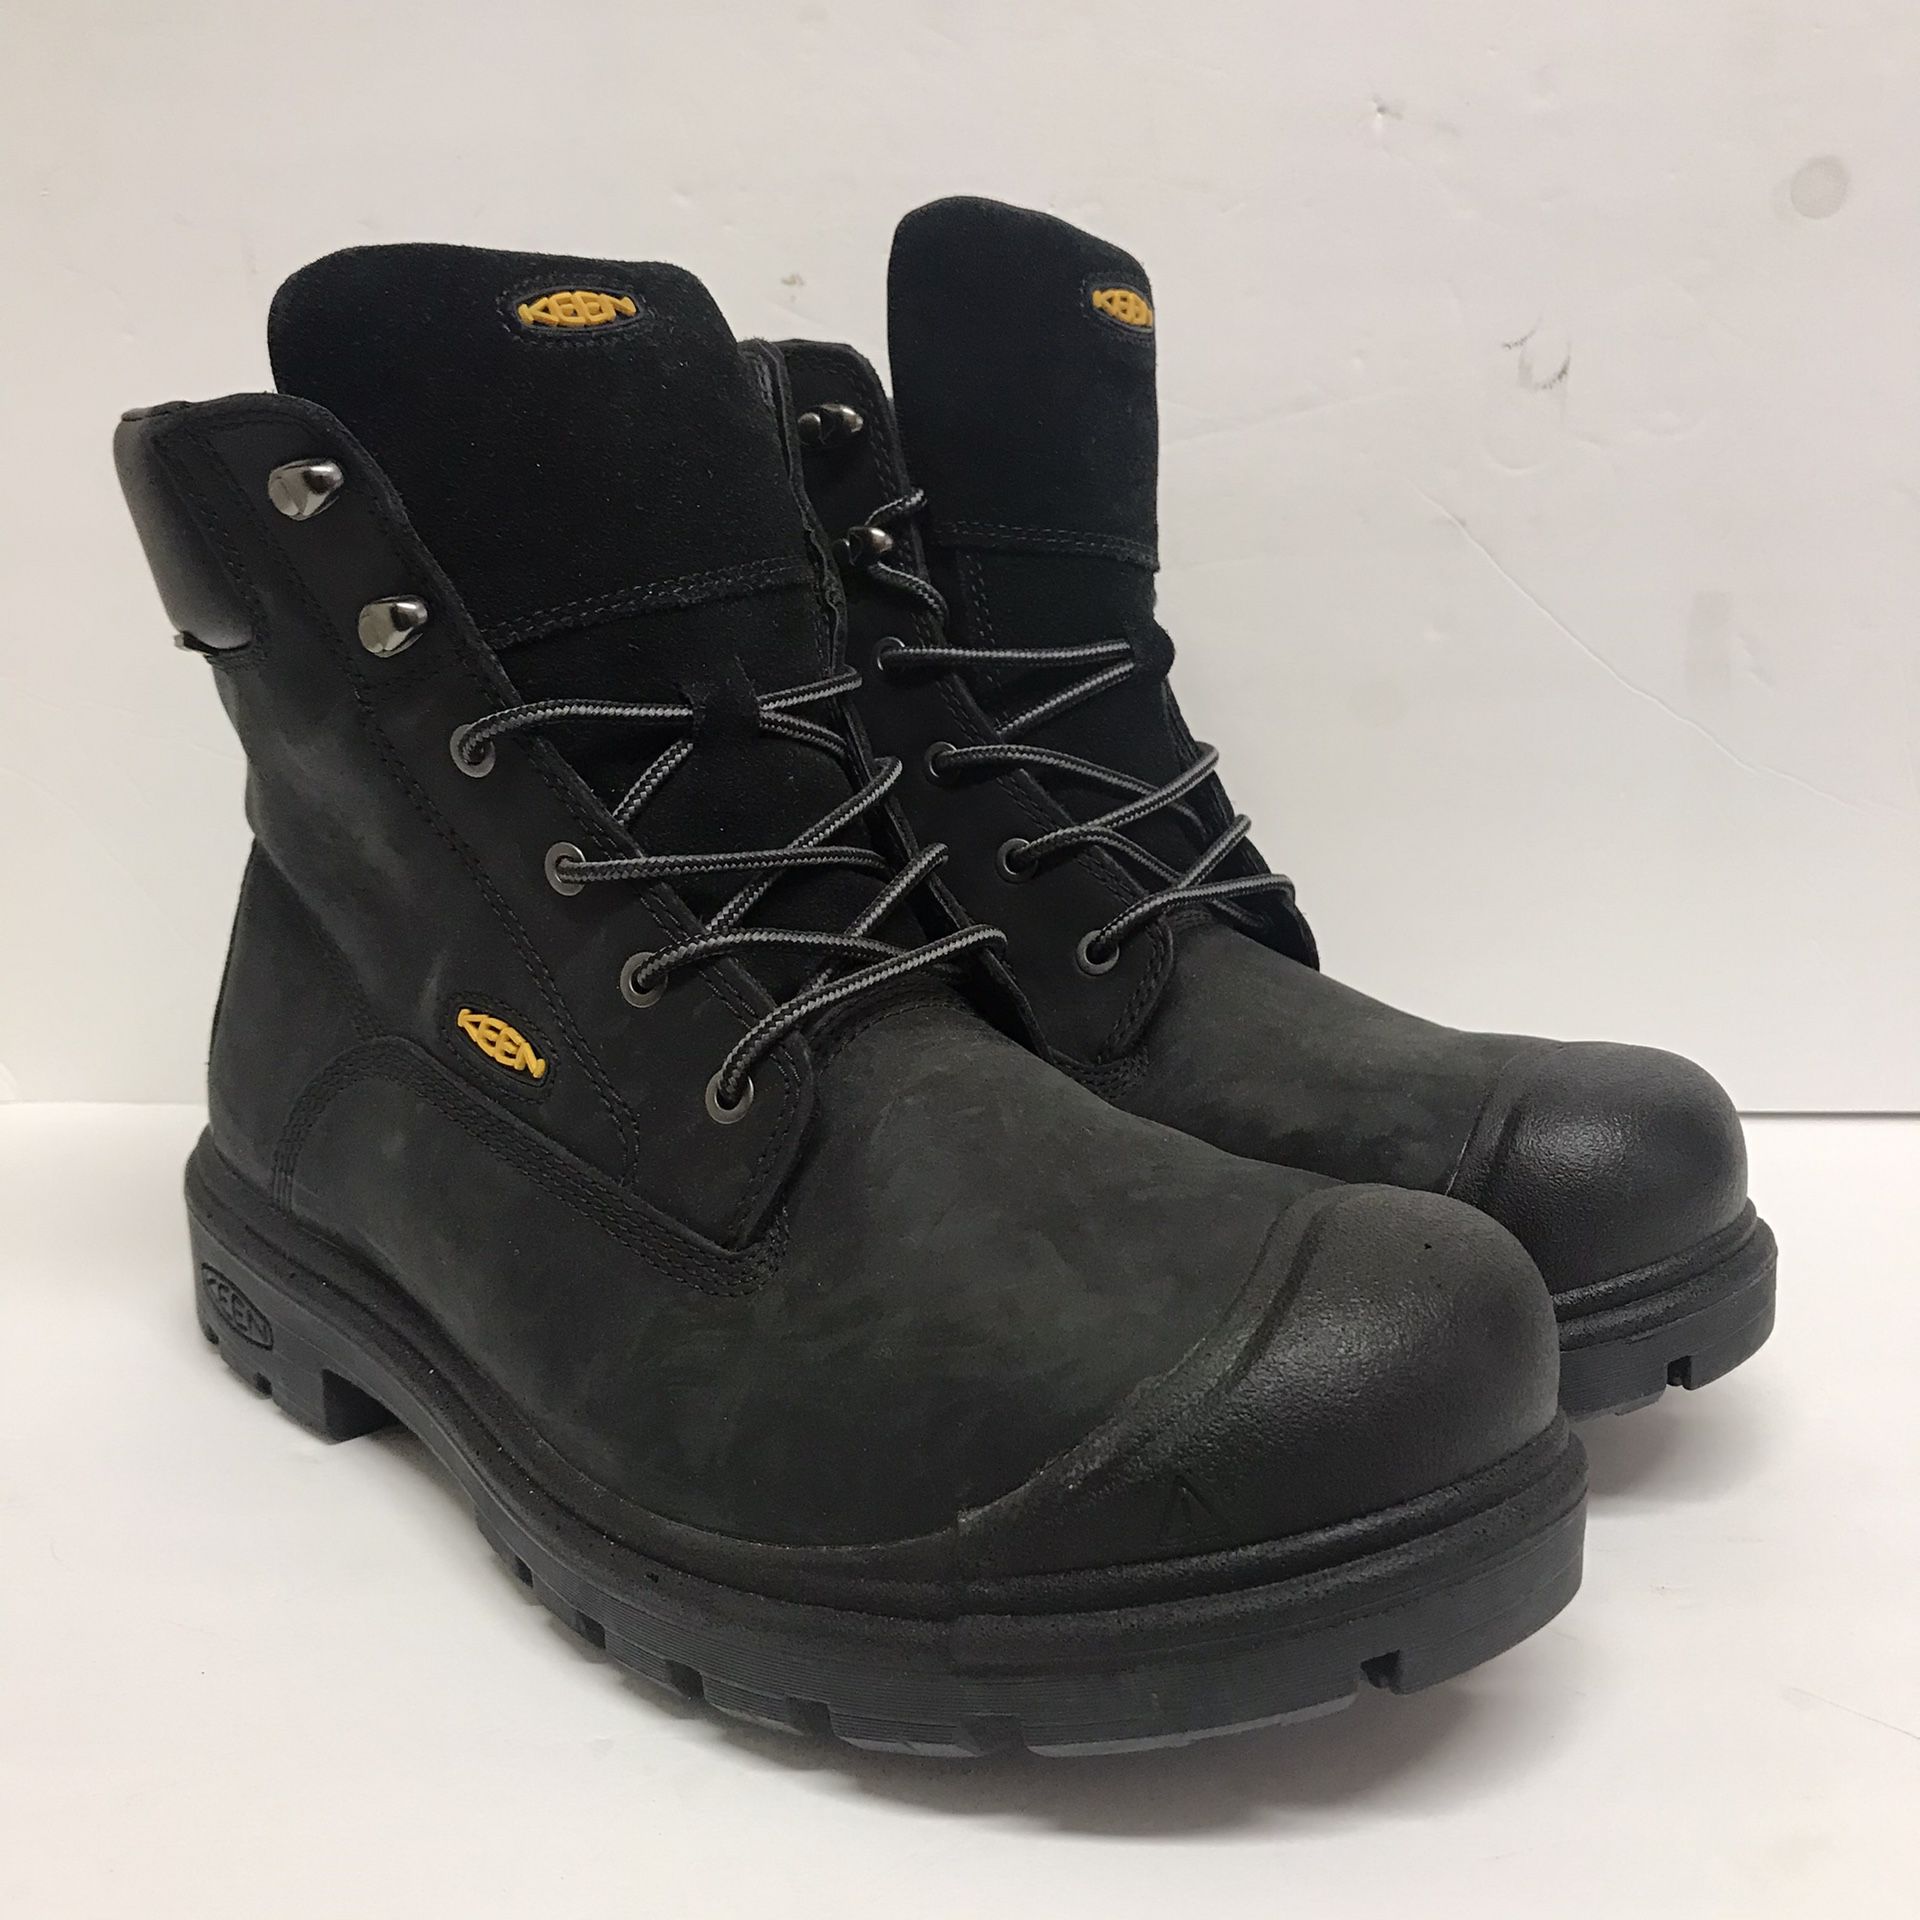 Keen Steel Toe Work Boots Size 13D